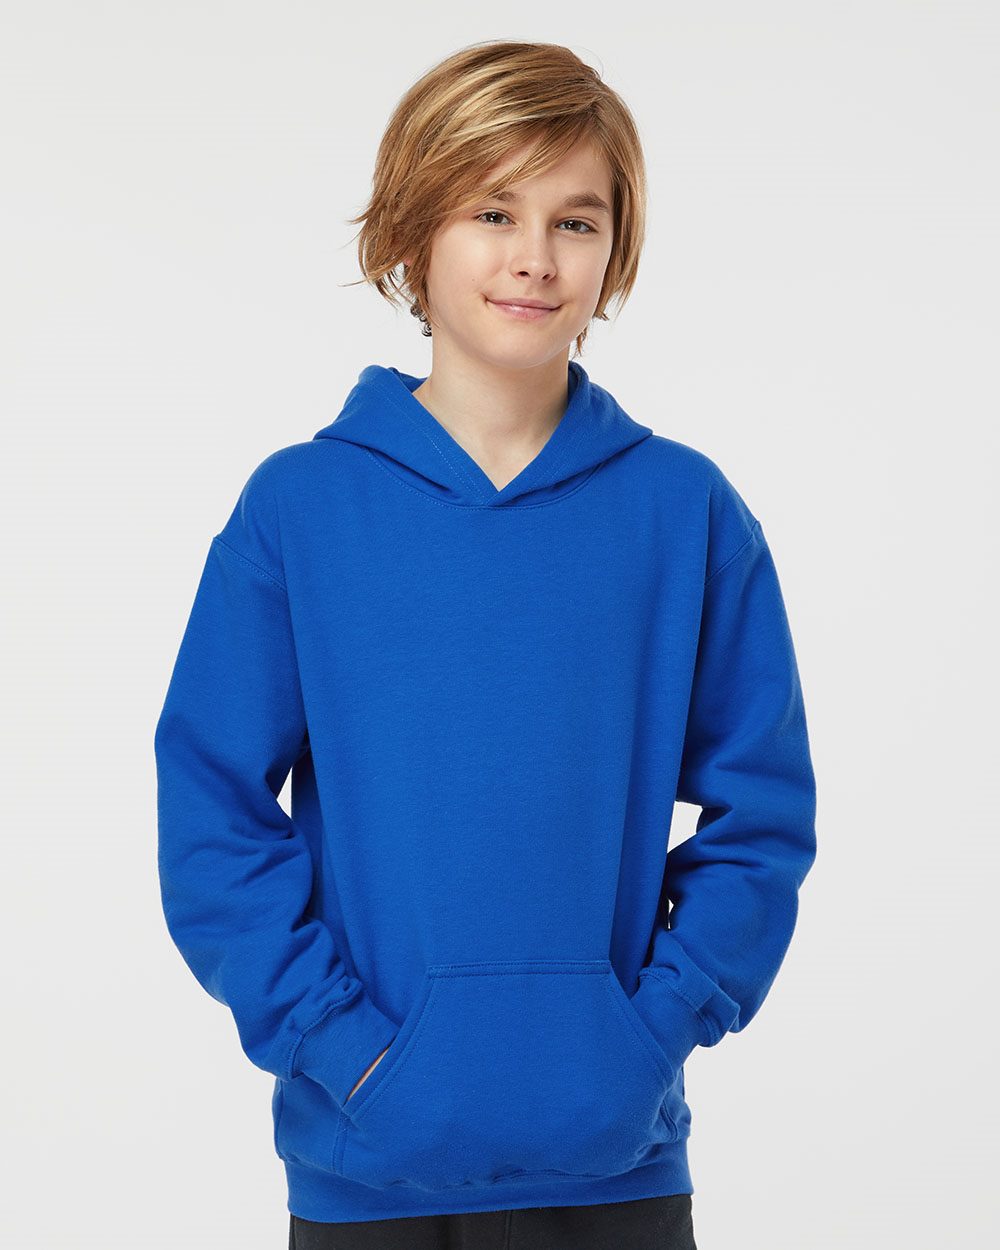 Tultex 320Y - Youth Hooded Sweatshirt